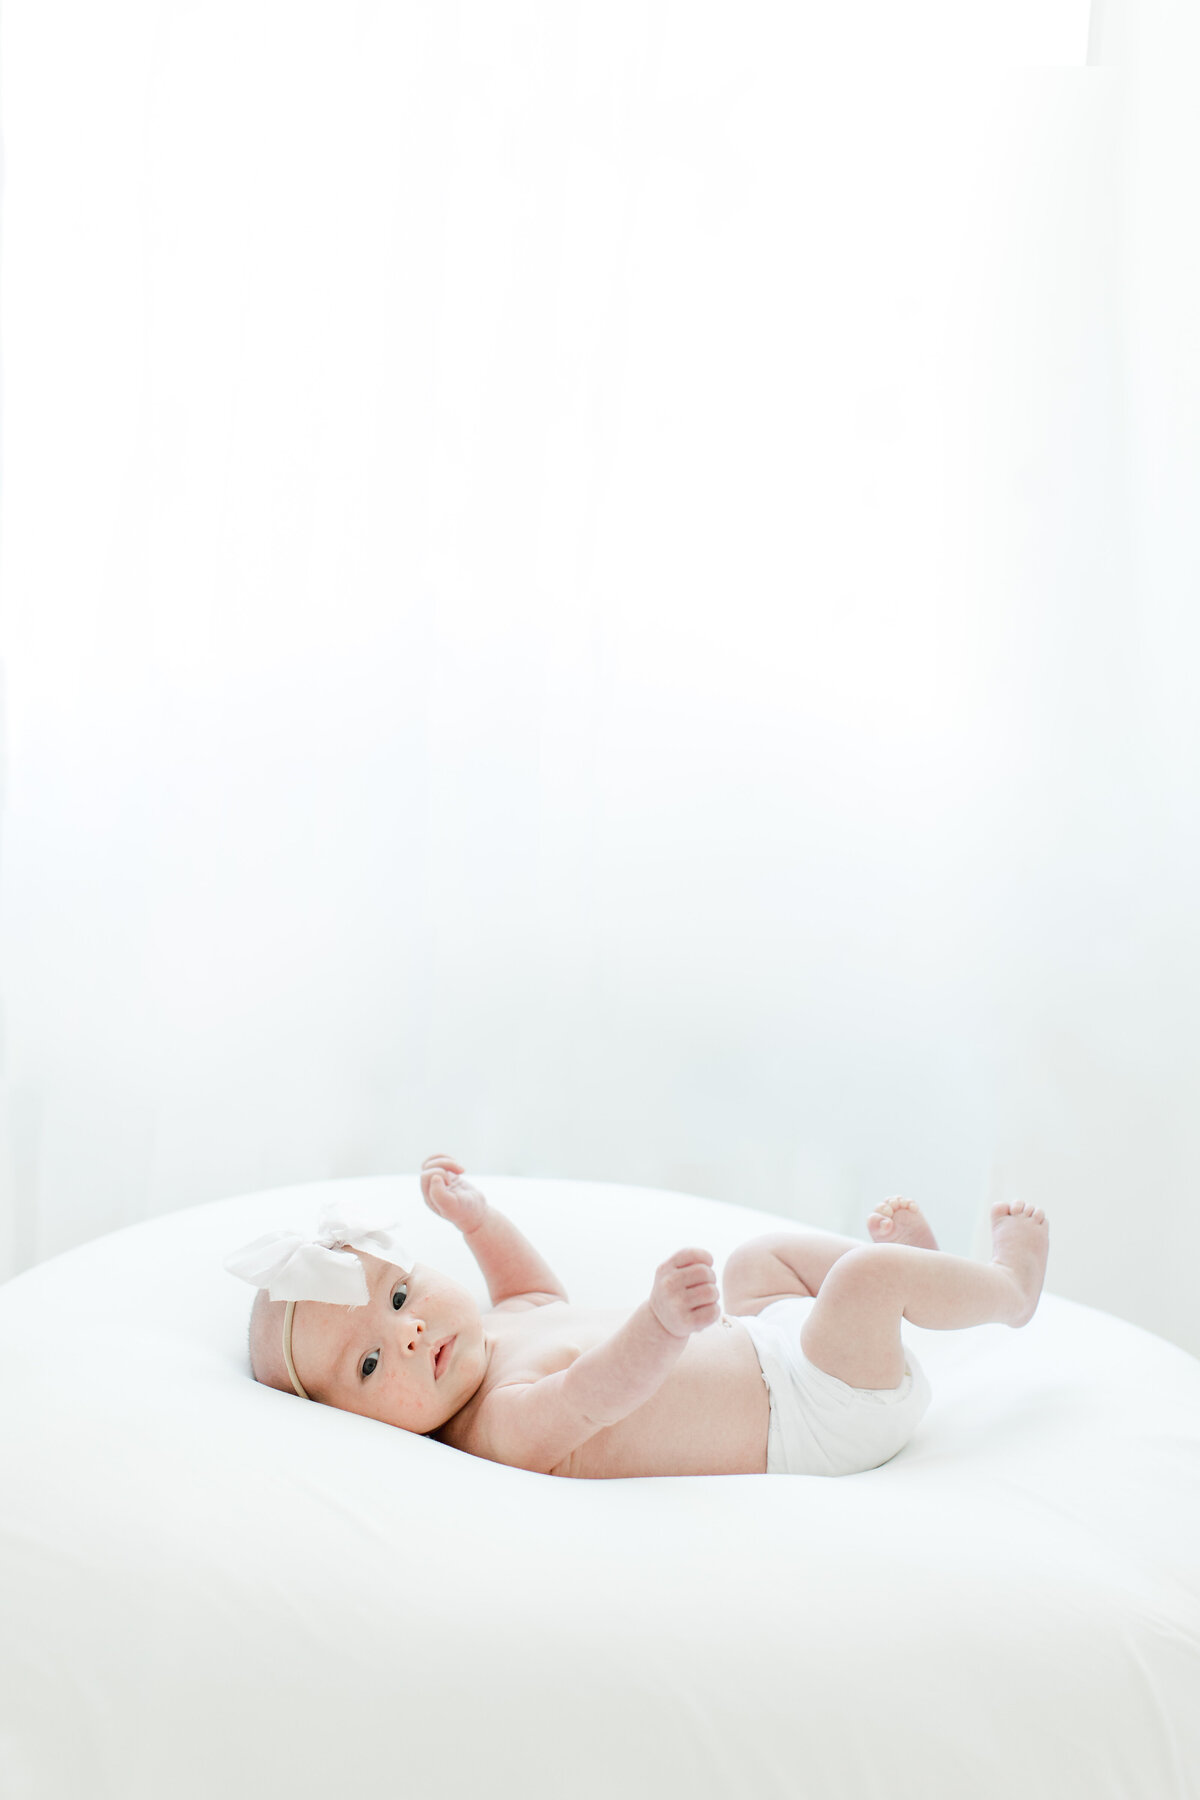 Westport CT Newborn Photographer - 3